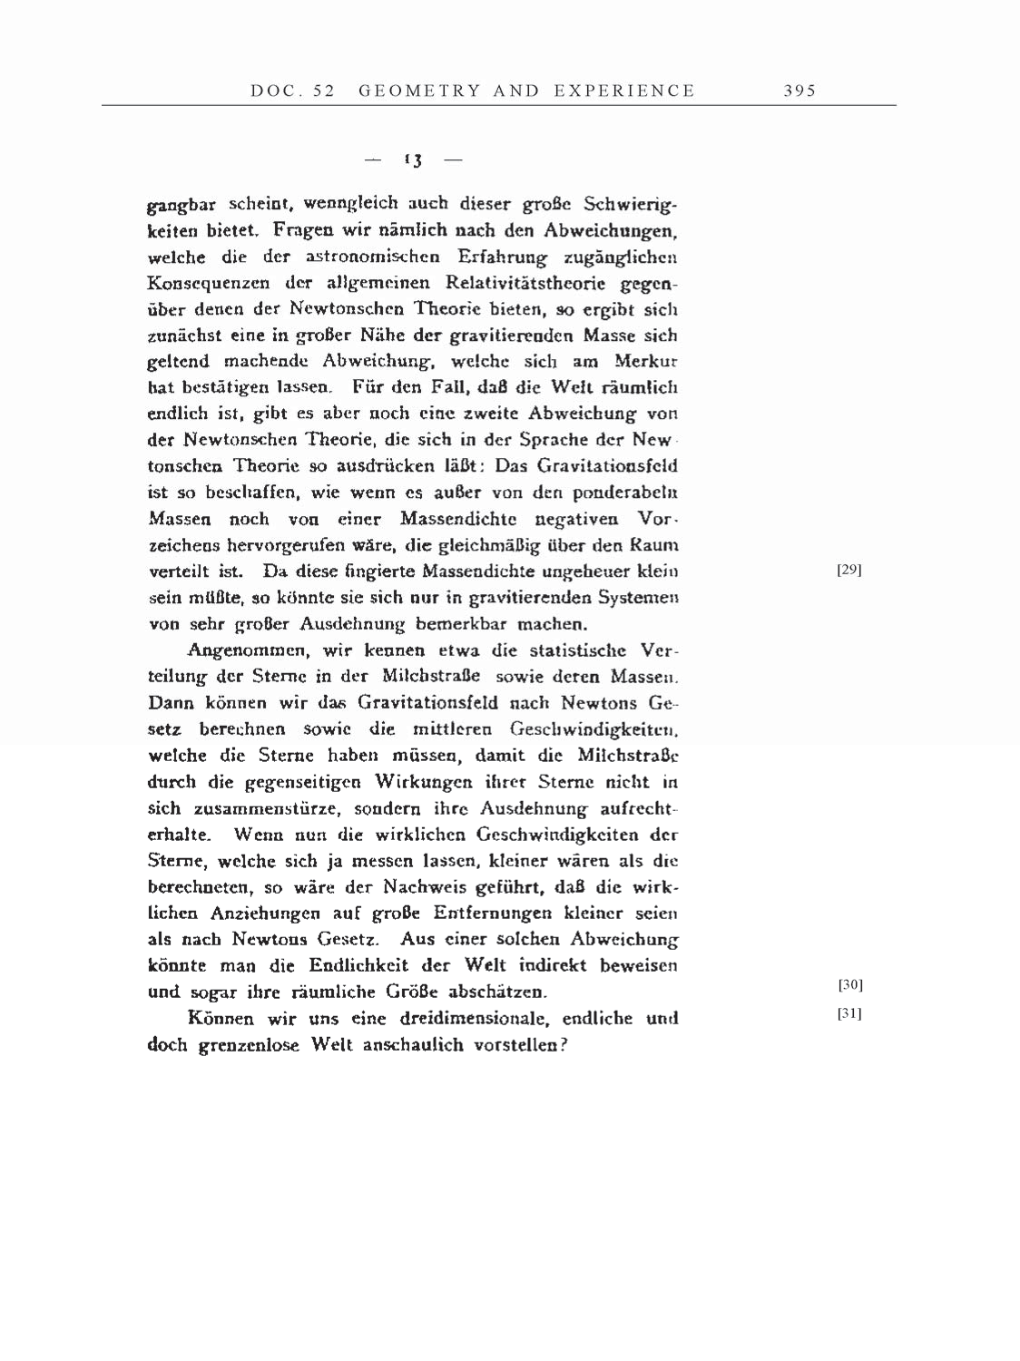 Volume 7: The Berlin Years: Writings, 1918-1921 page 395